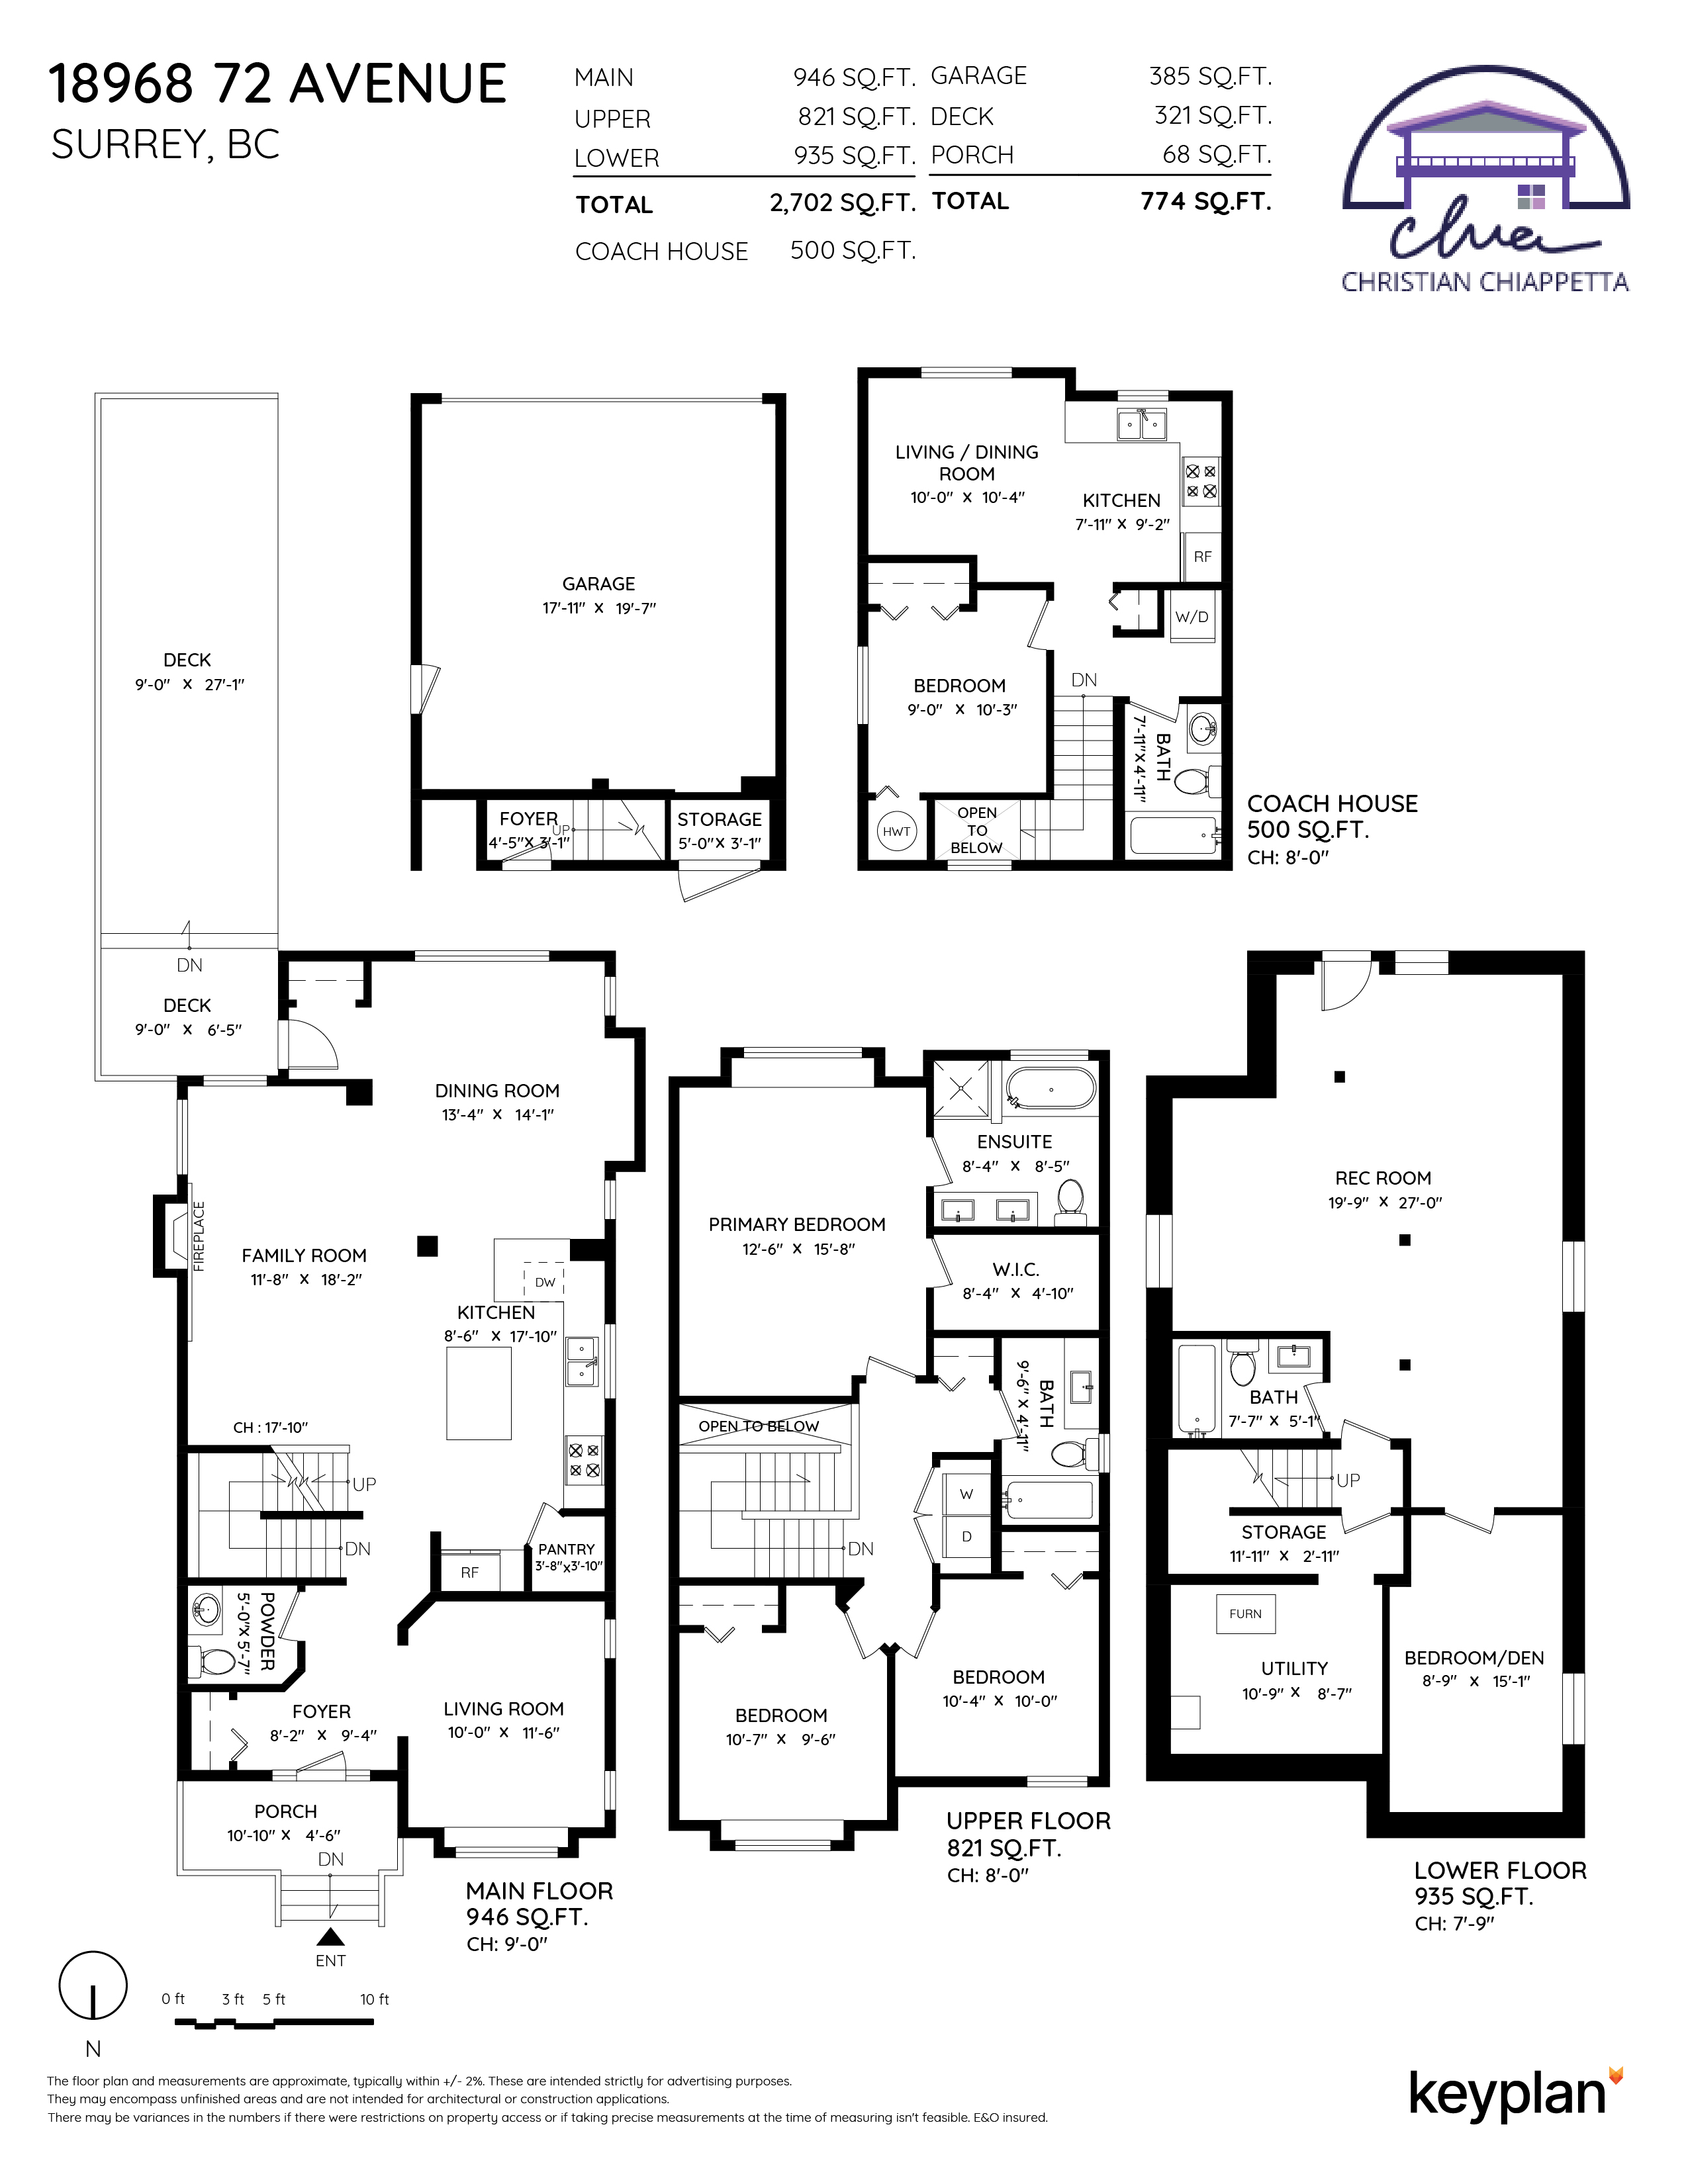 Christian Chiappetta - 18968 72 Avenue, Surrey, BC, Canada | Floor Plan 1